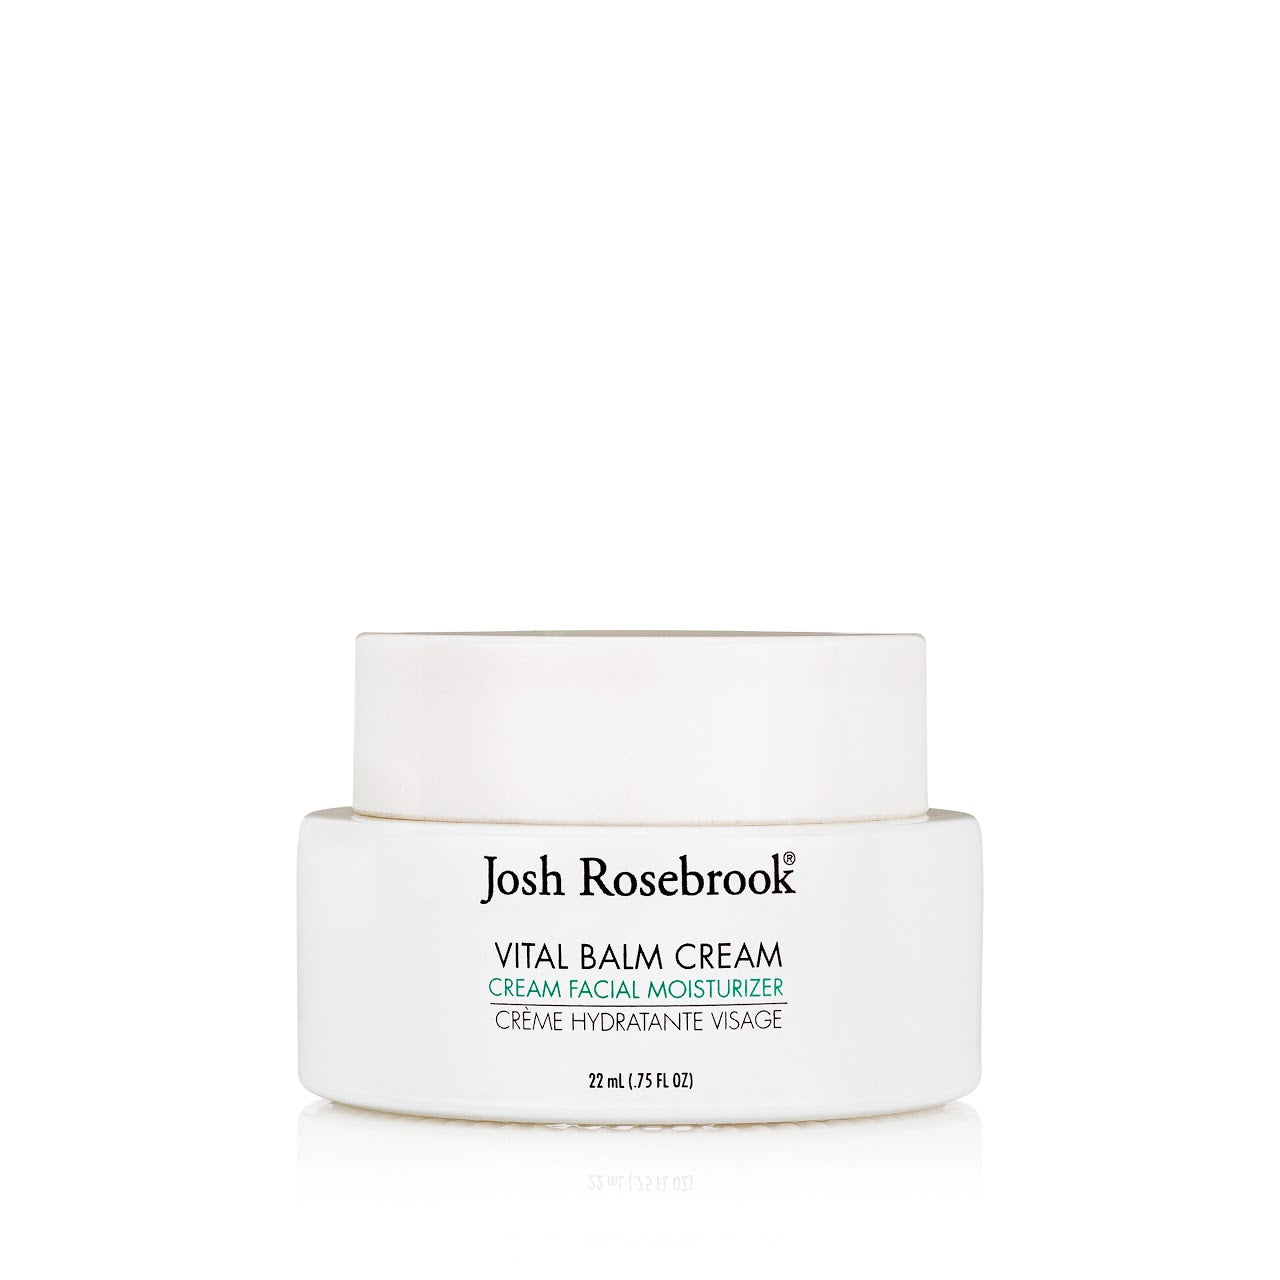 Josh Rosebrook - Vital Balm Cream 22 ml